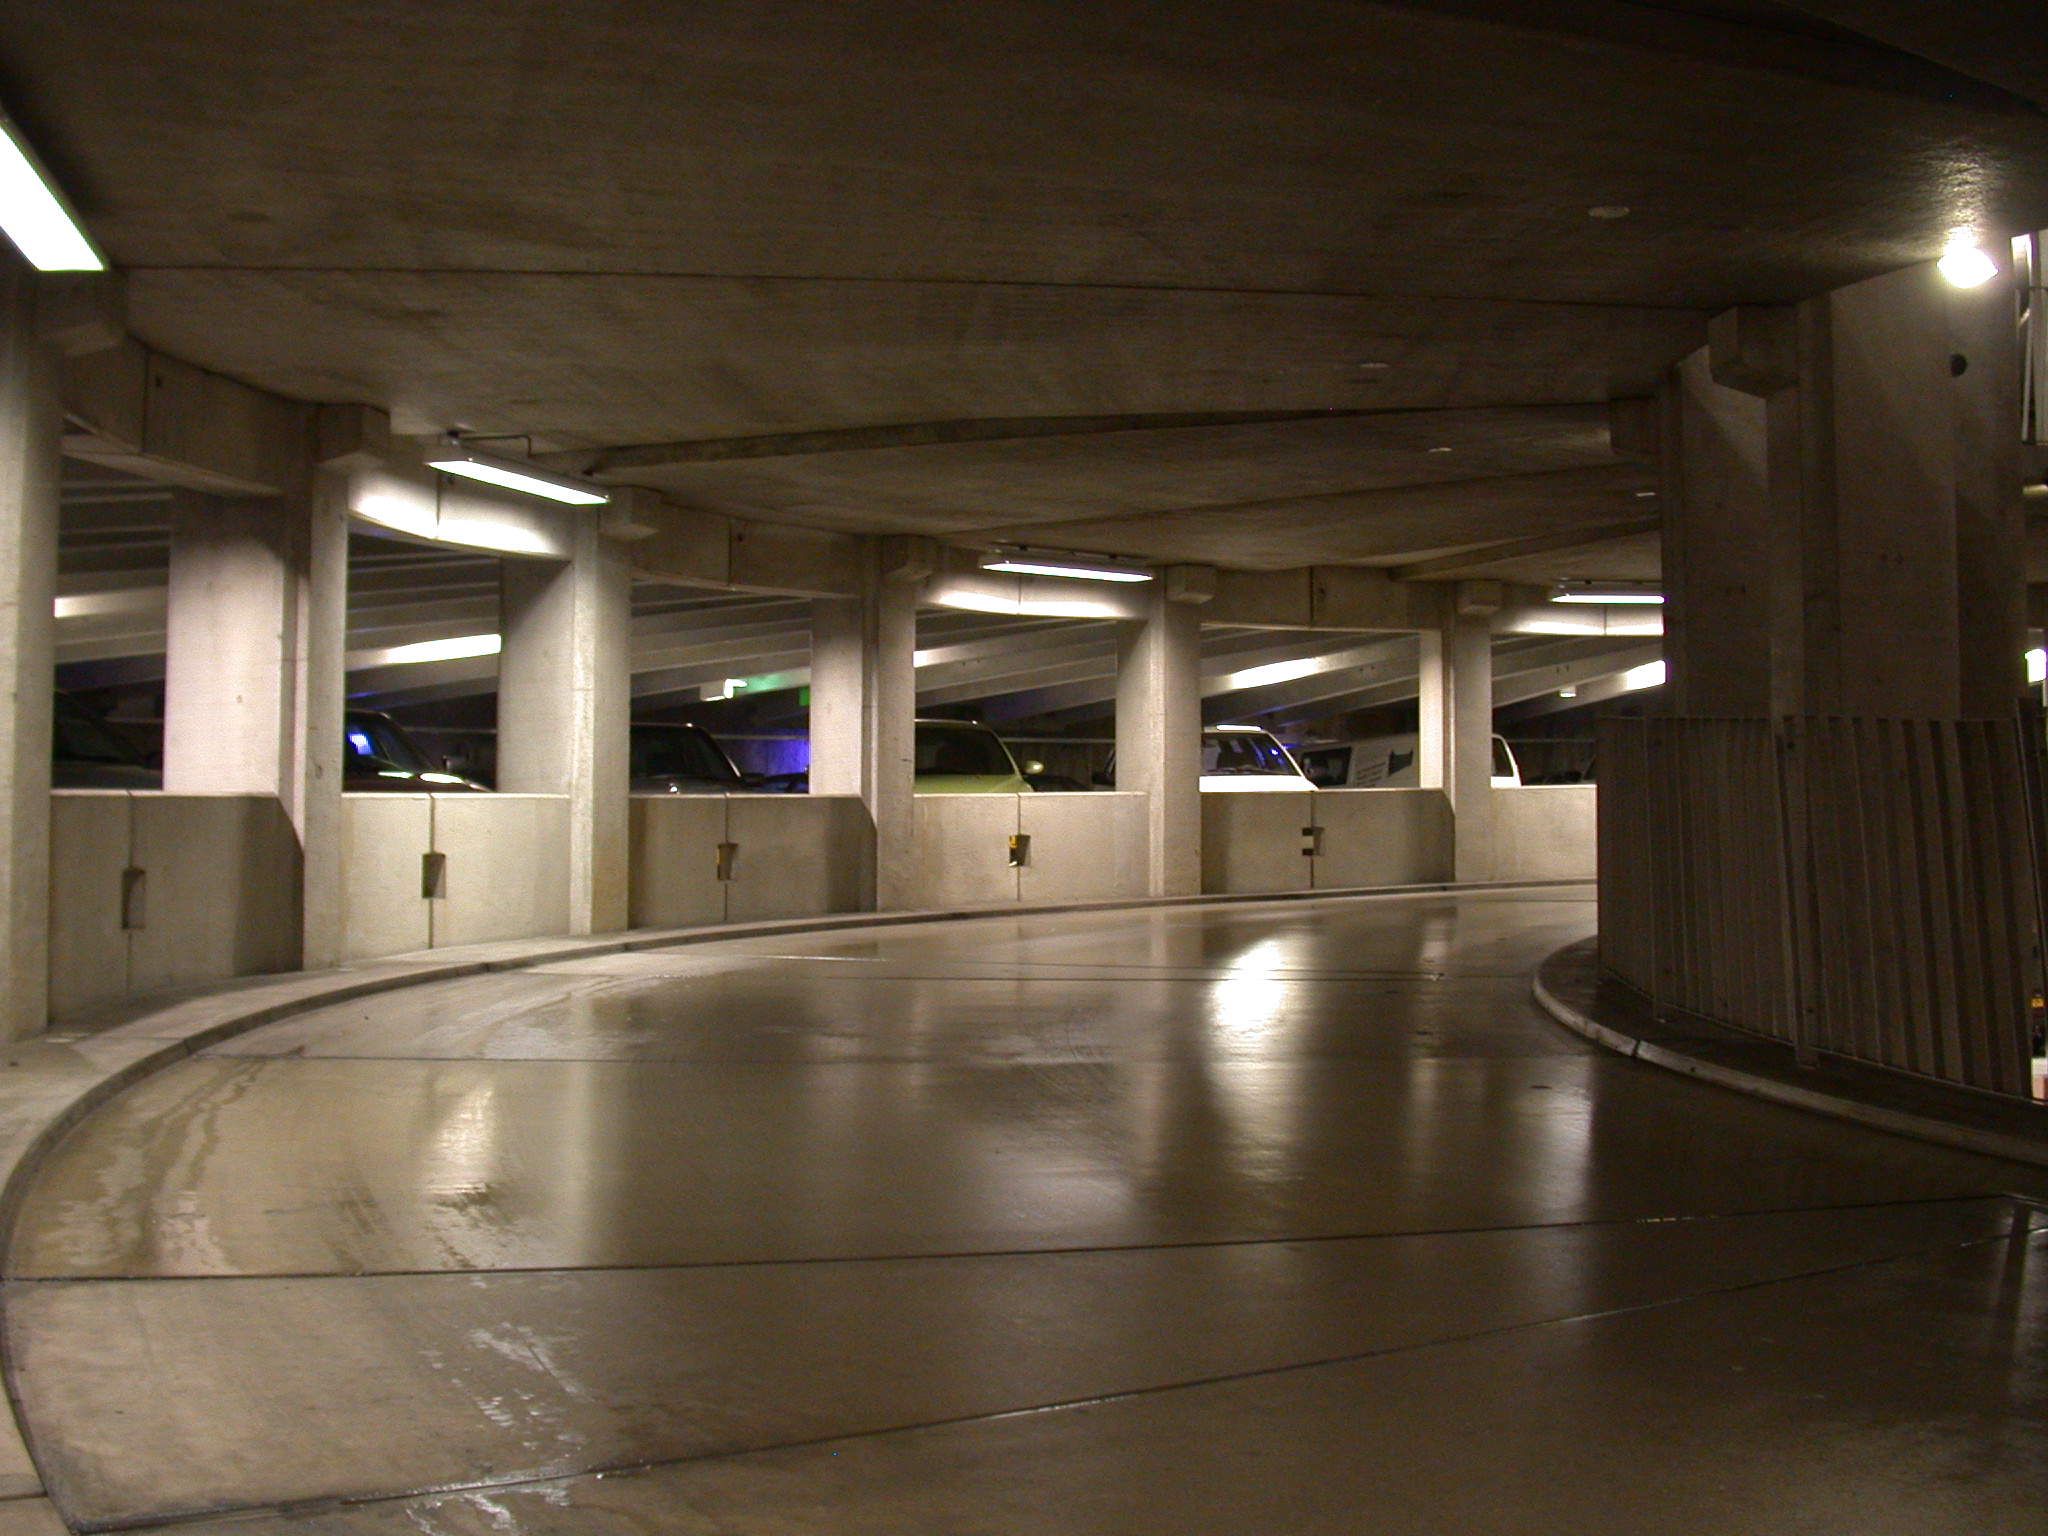 parking lot parkinglot concrete shining shiny cars parked underground glossy